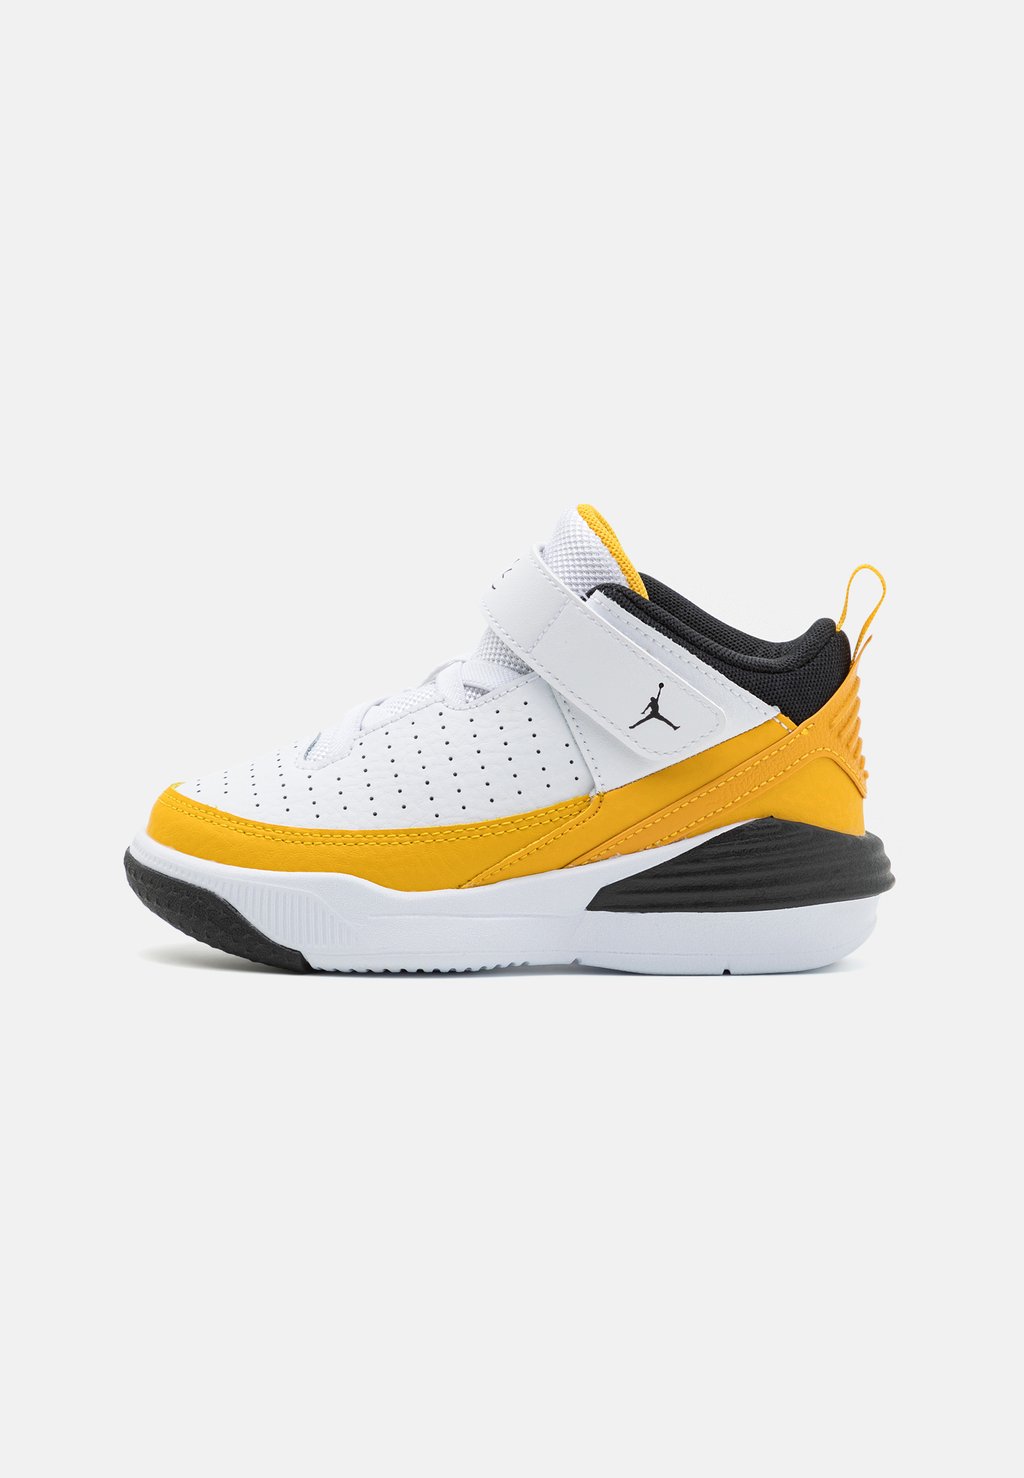 Баскетбольные кроссовки Jordan Max Aura 5 Unsex Jordan, цвет yellow ochre/white/black кроссовки guess vice white ochre